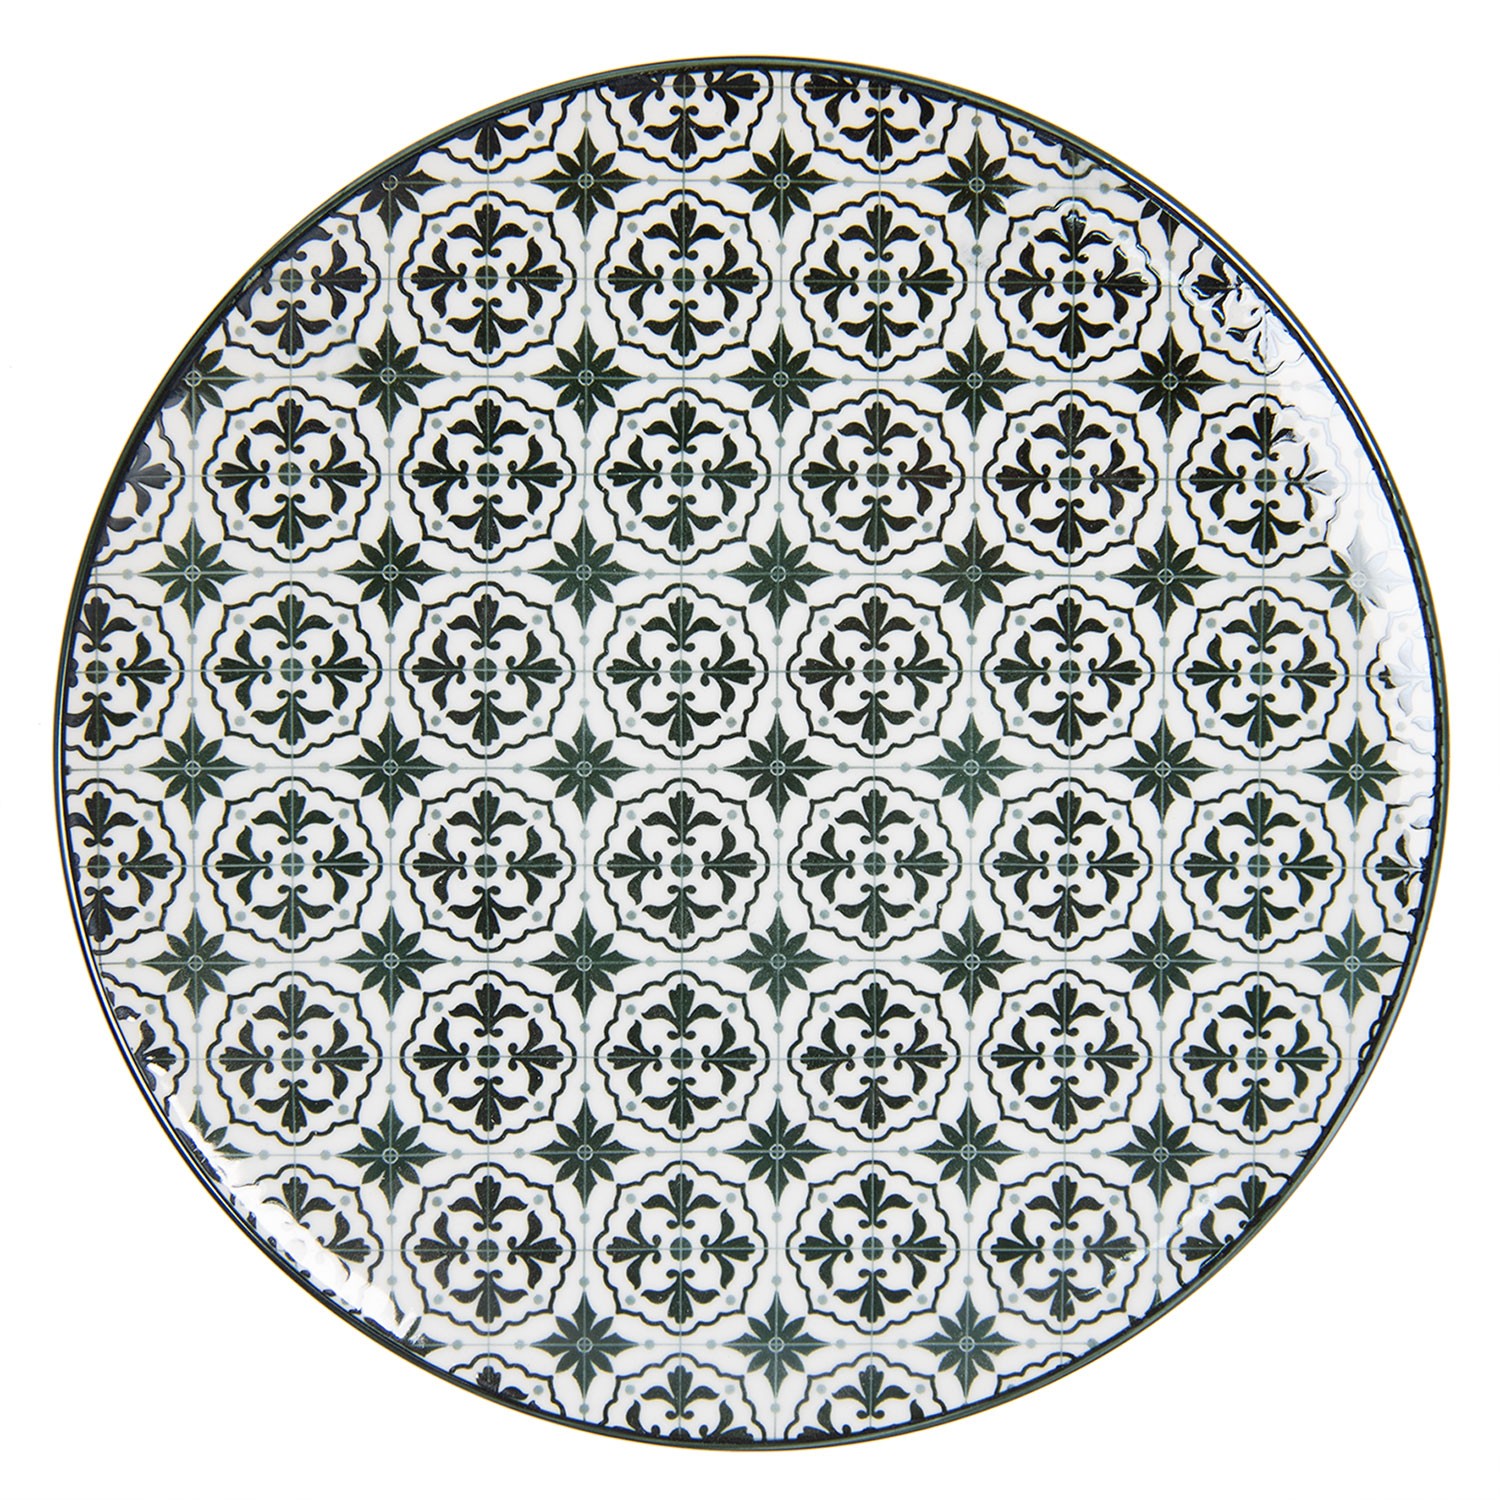 Černý jídelní talíř Blackor - Ø  26 cm Clayre & Eef